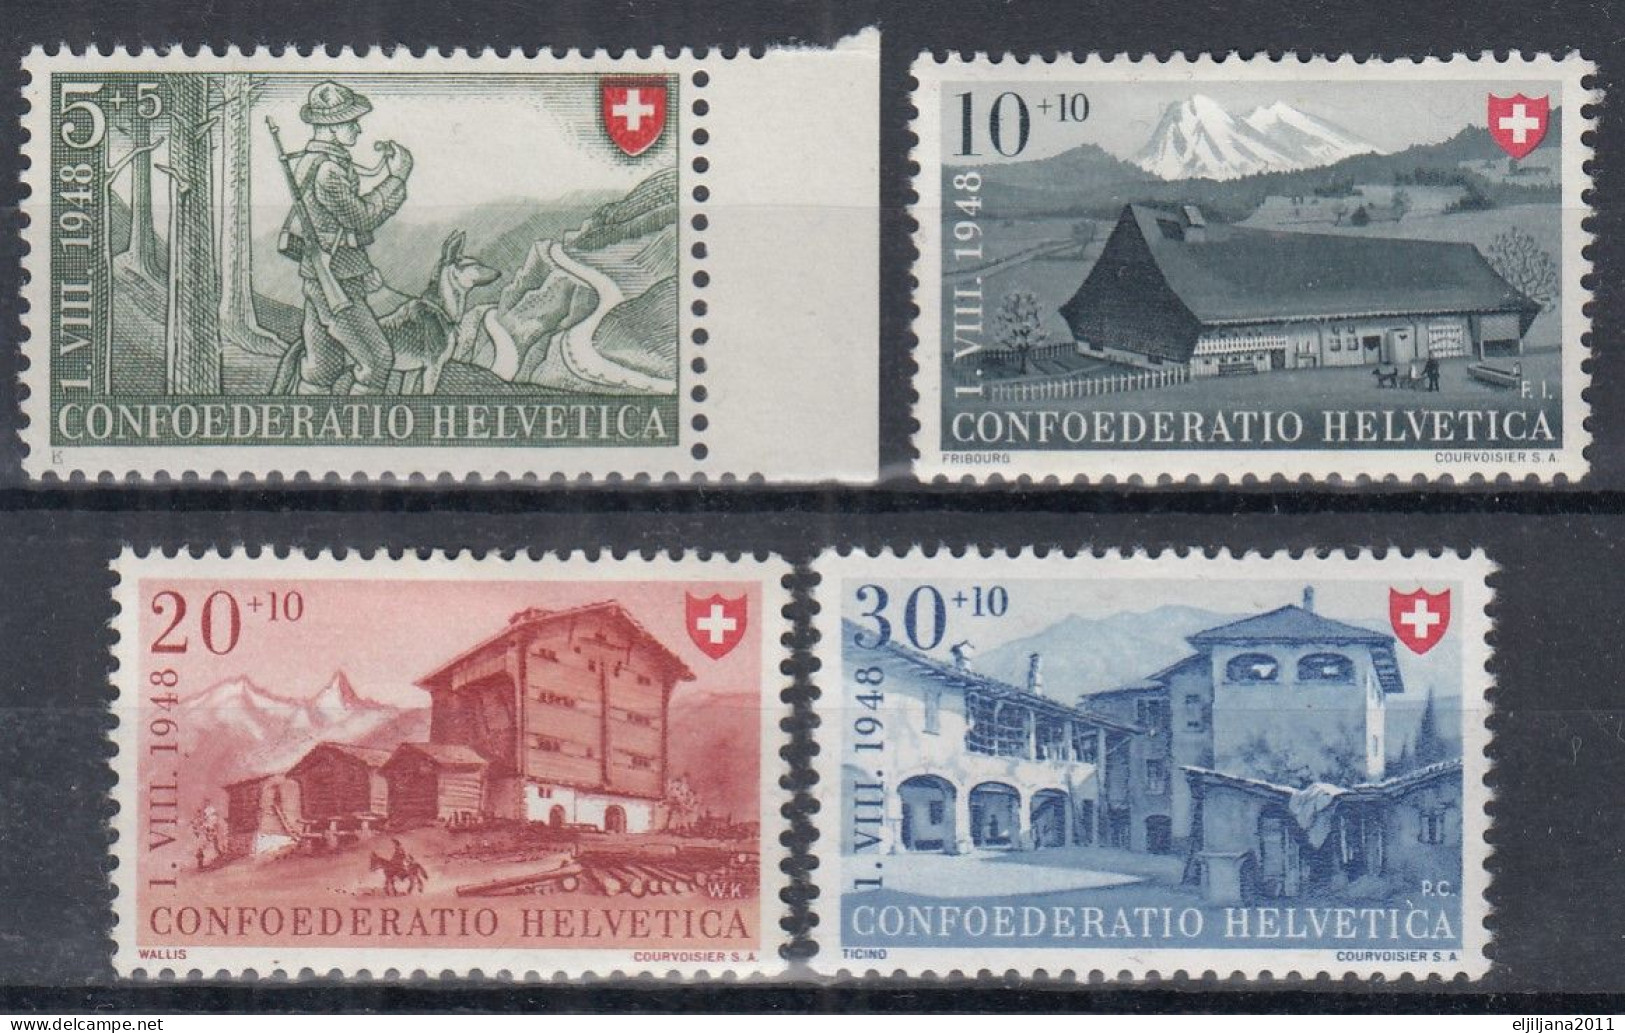 Switzerland / Helvetia / Schweiz / Suisse 1948 ⁕ Pro Patria Mi.508-511 ⁕ 4v MH - Unused Stamps